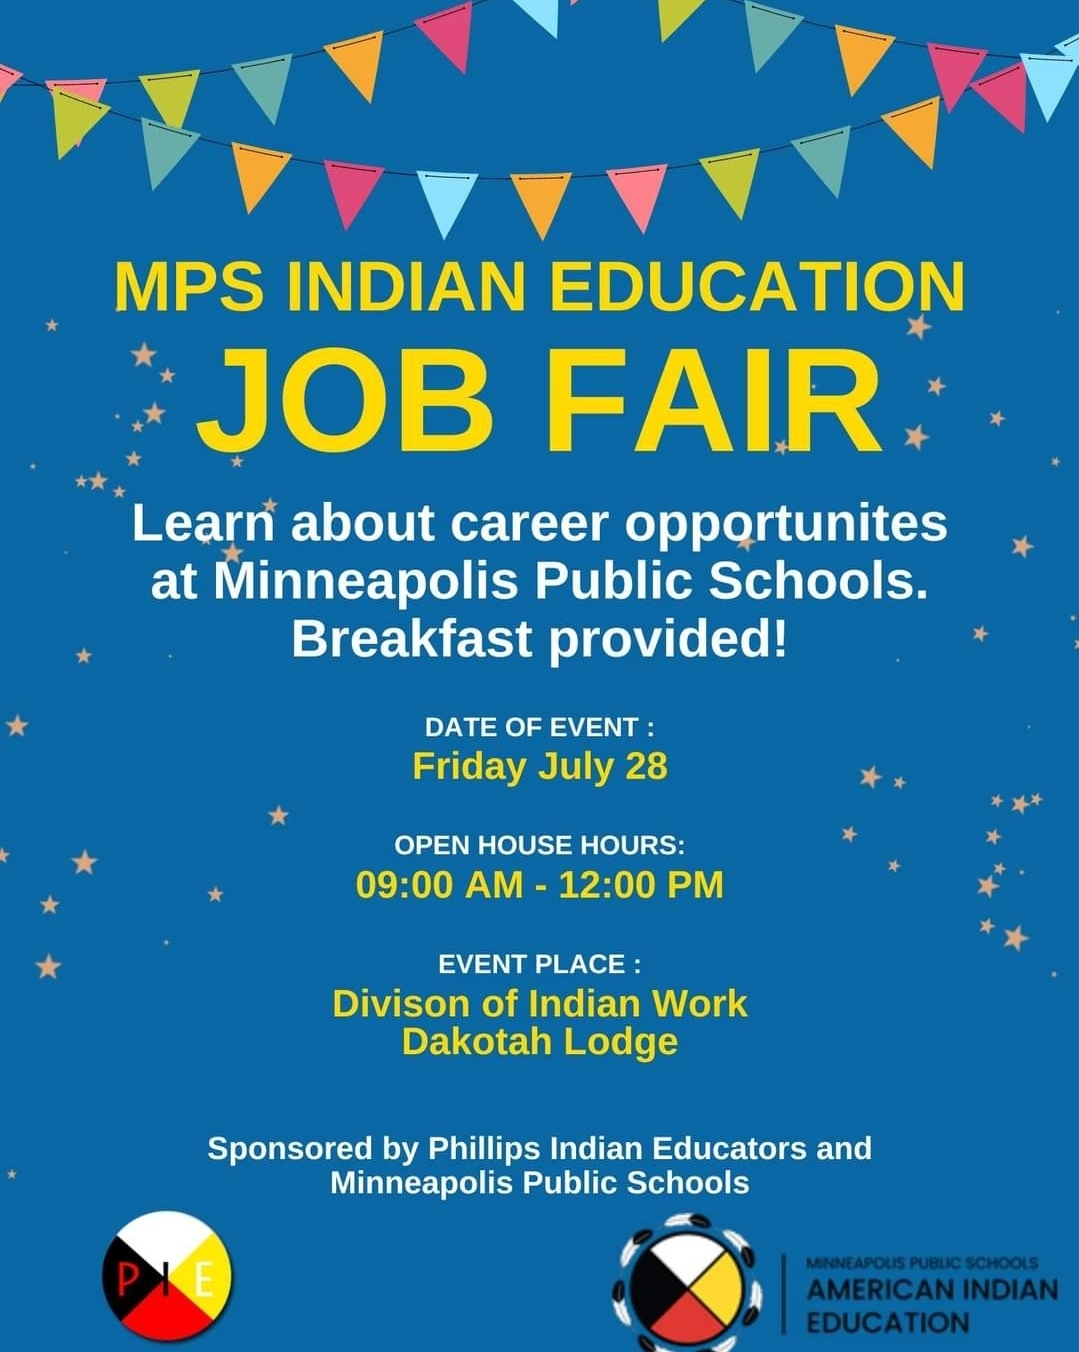 MSP Indian Job Fair